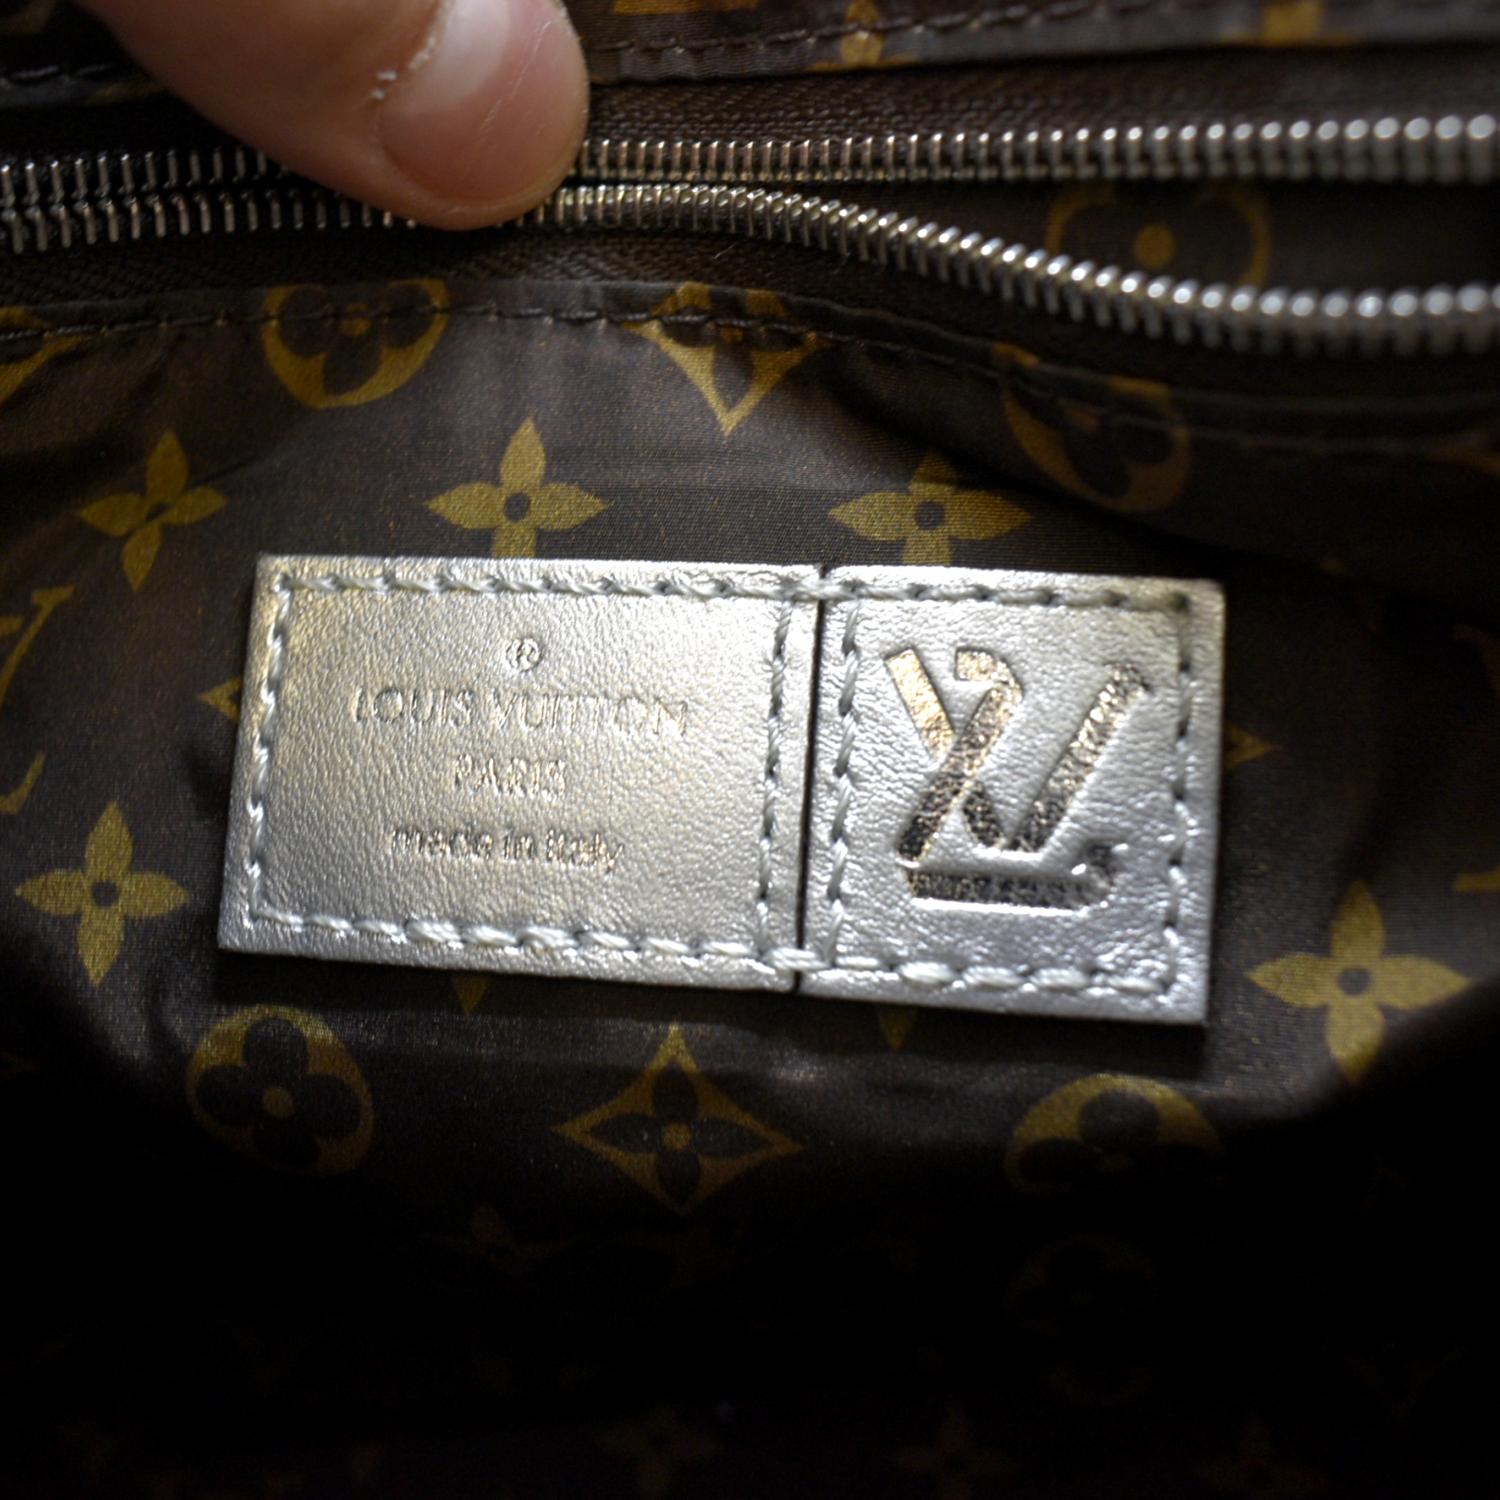 Louis Vuitton Pillow Speedy Bandoulière 25 Silver Monogram in 2023